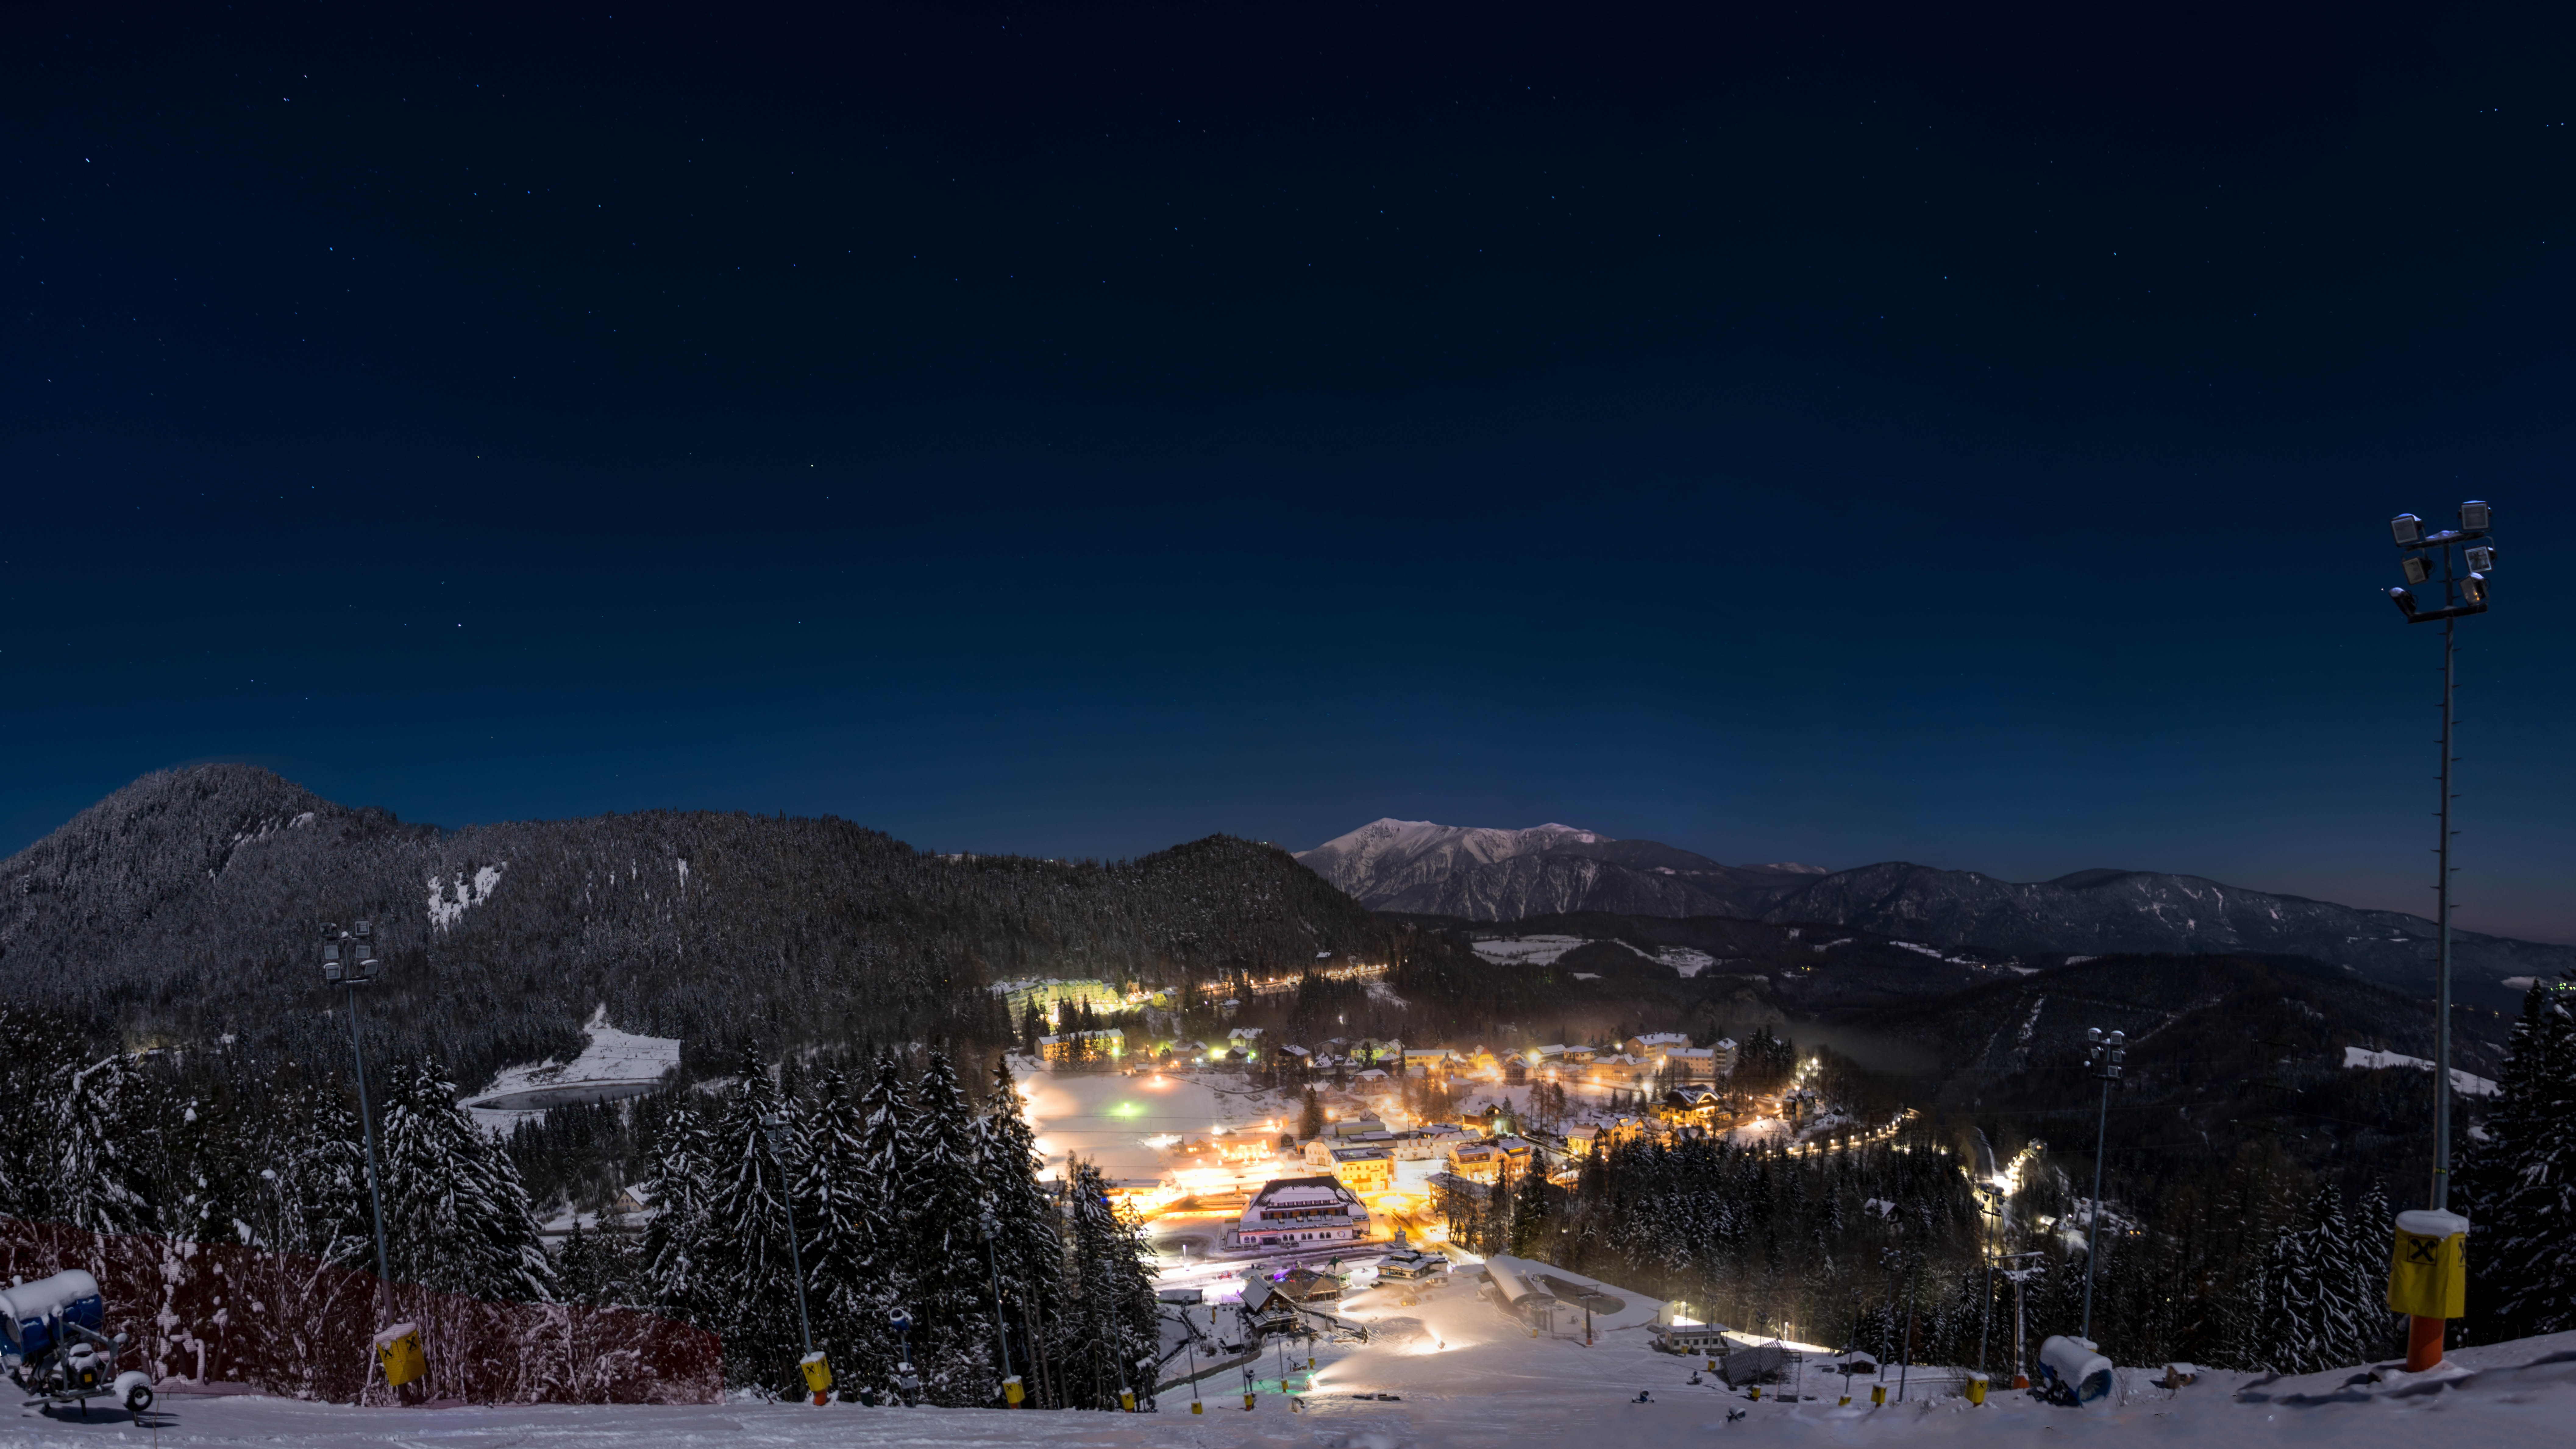 General 8452x4754 night stars sky winter snow lights low light ski resort mountains